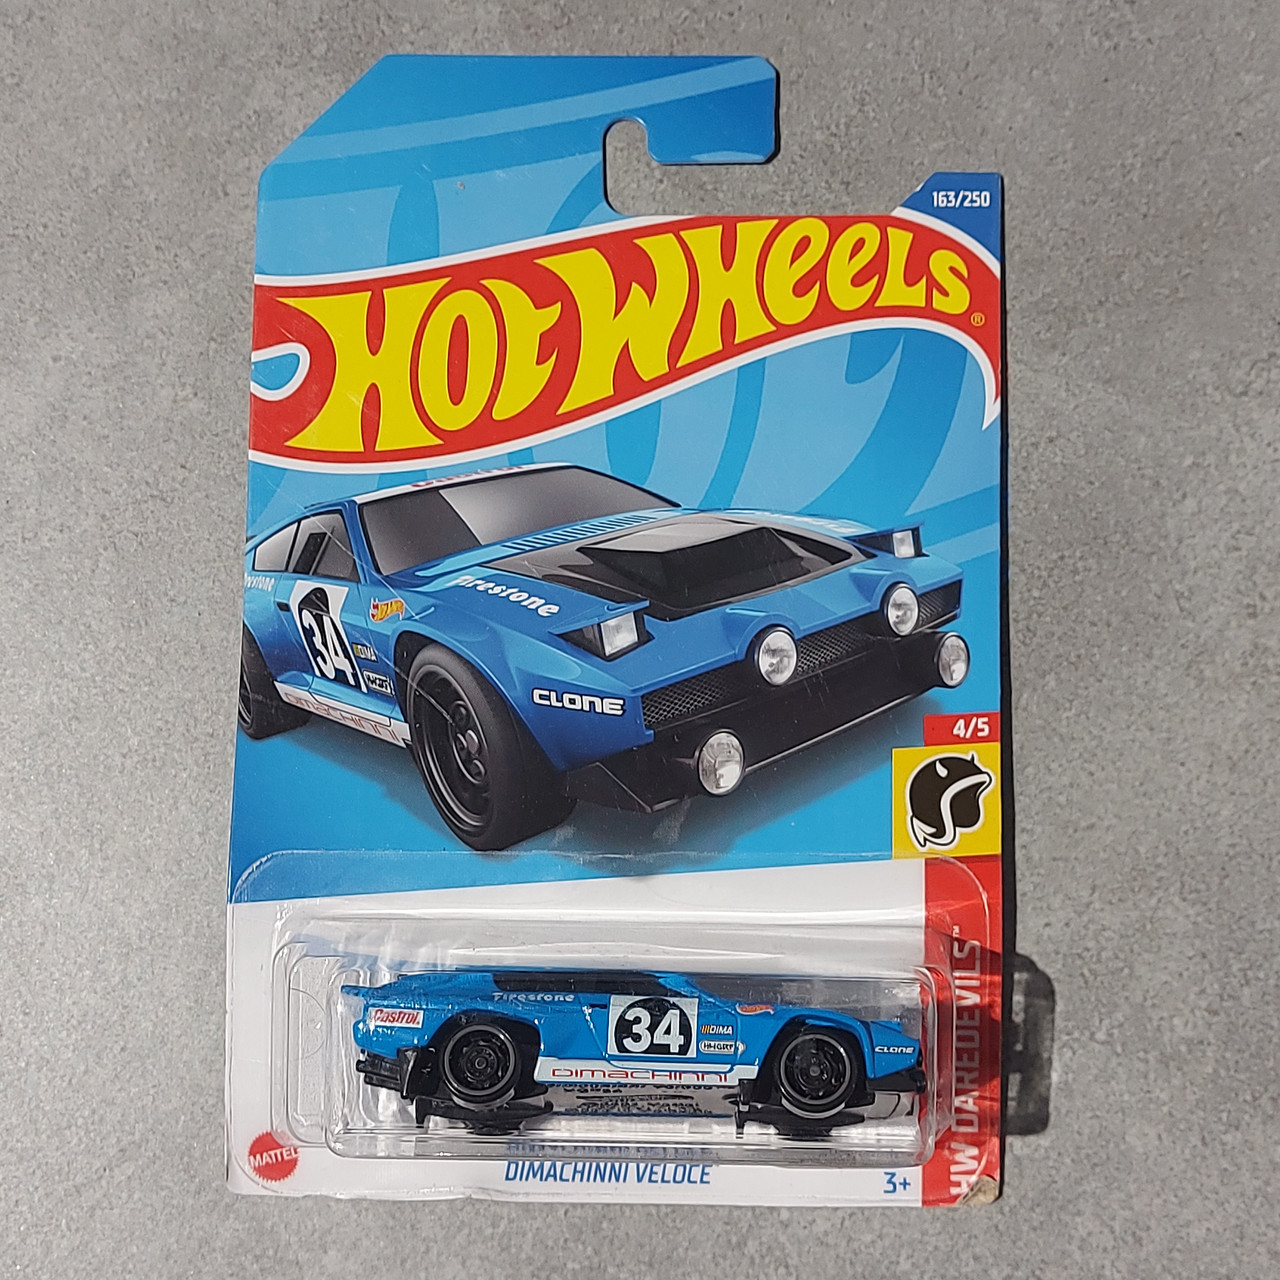 Оригинальная Машинка "Hot wheels" Dimachinni Veloce. HW Daredevils. Mattel. 163/250. Хотвилс. Машинки. Подарок